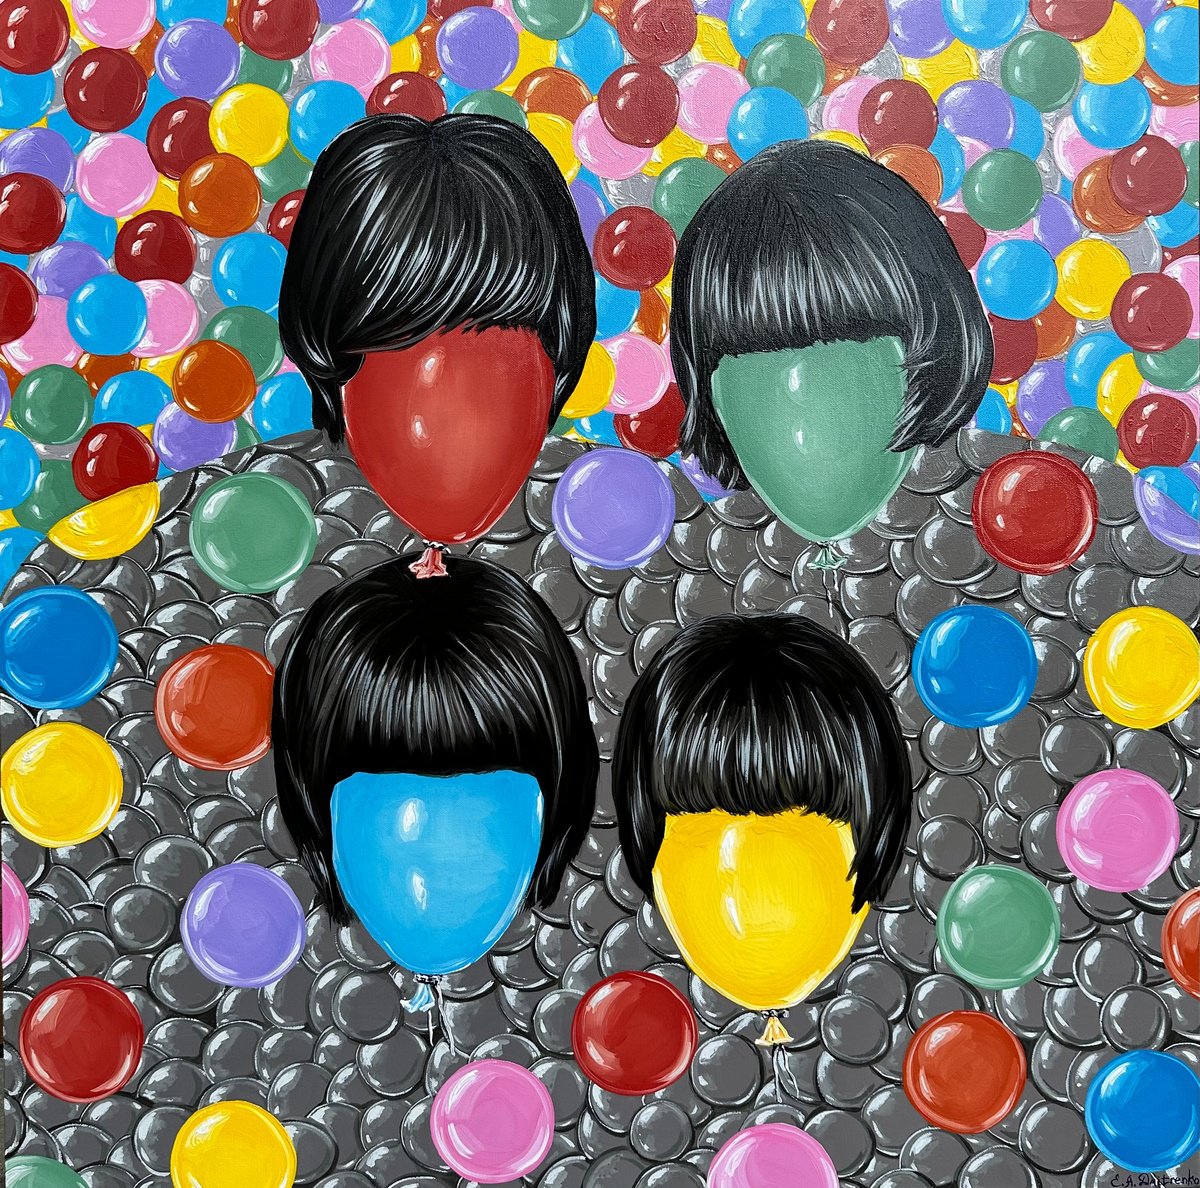 The Beatles Balloons by Elena Adele Dmitrenko